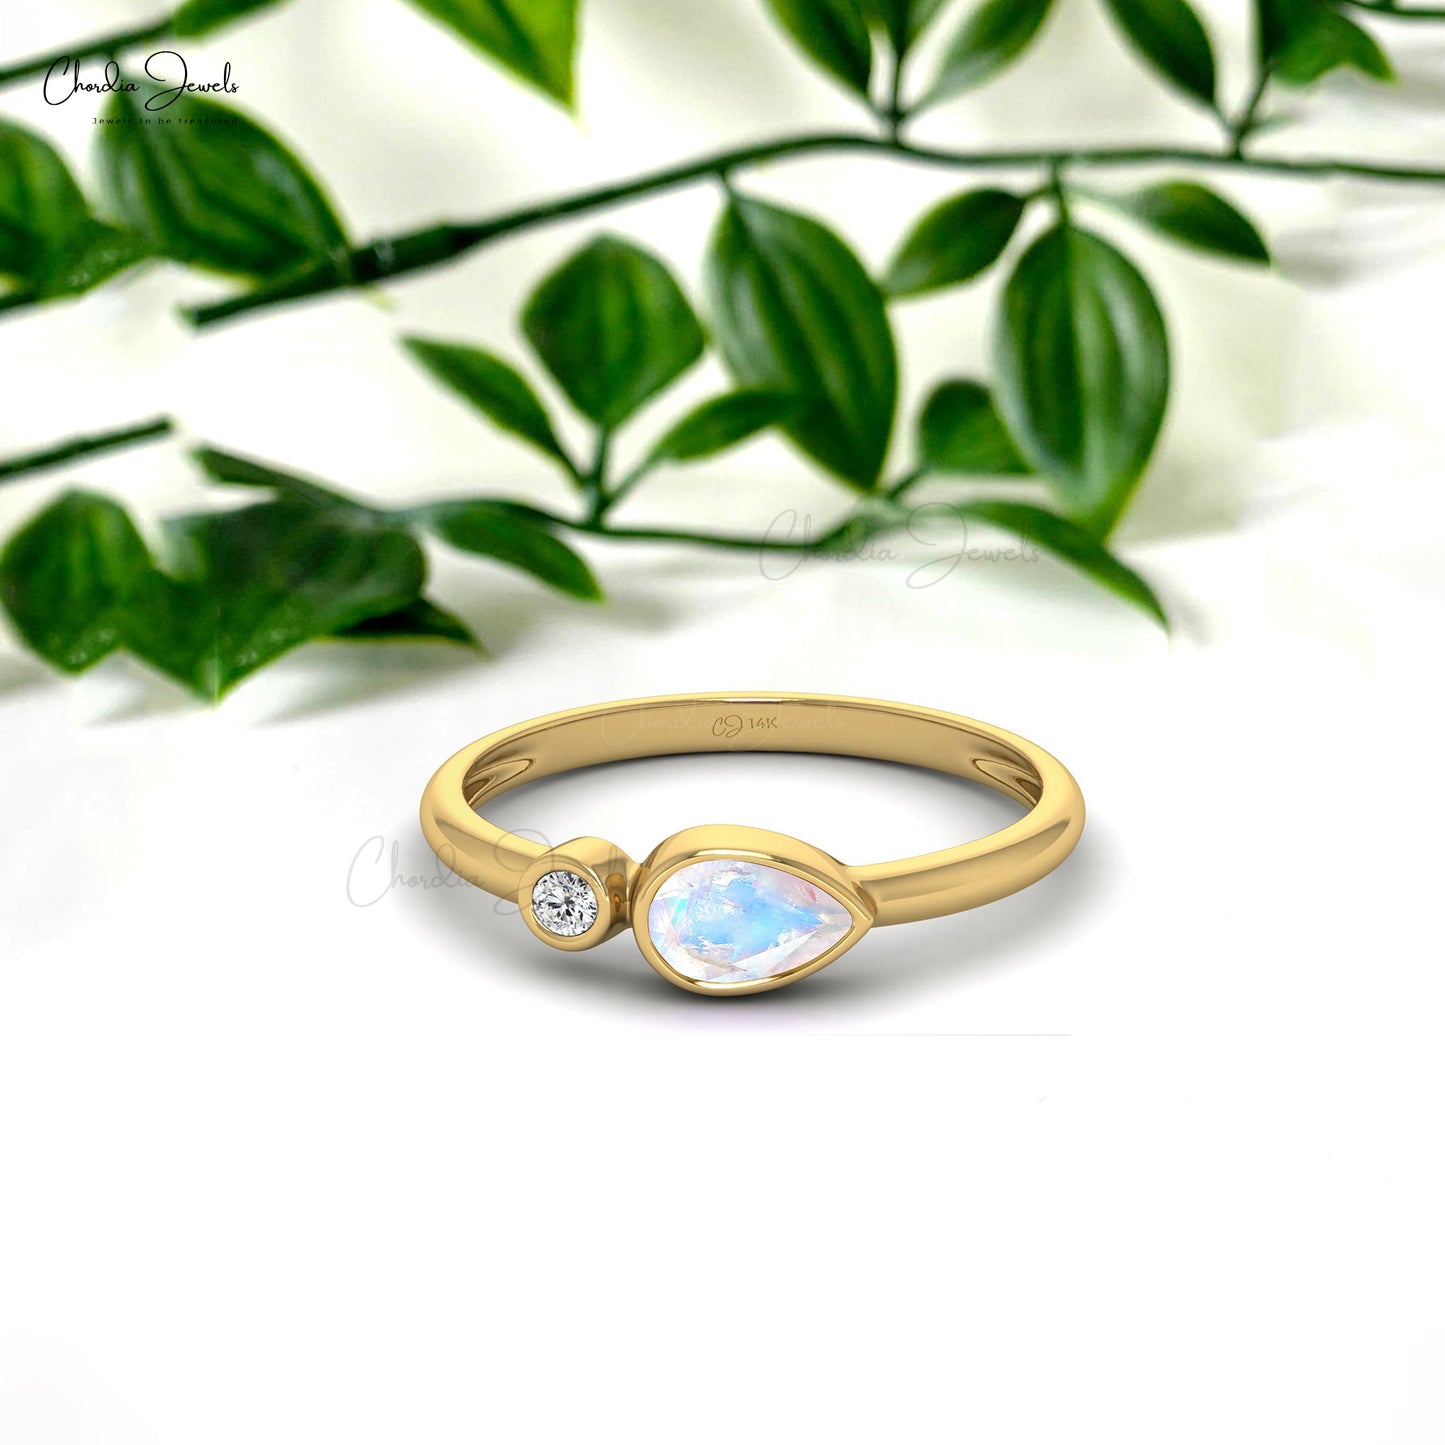 Rainbow Moonstone 14k Real Gold Diamond Ring 6x4mm Pear Cut Gemstone Engagement Ring Minimalist Jewelry For Women